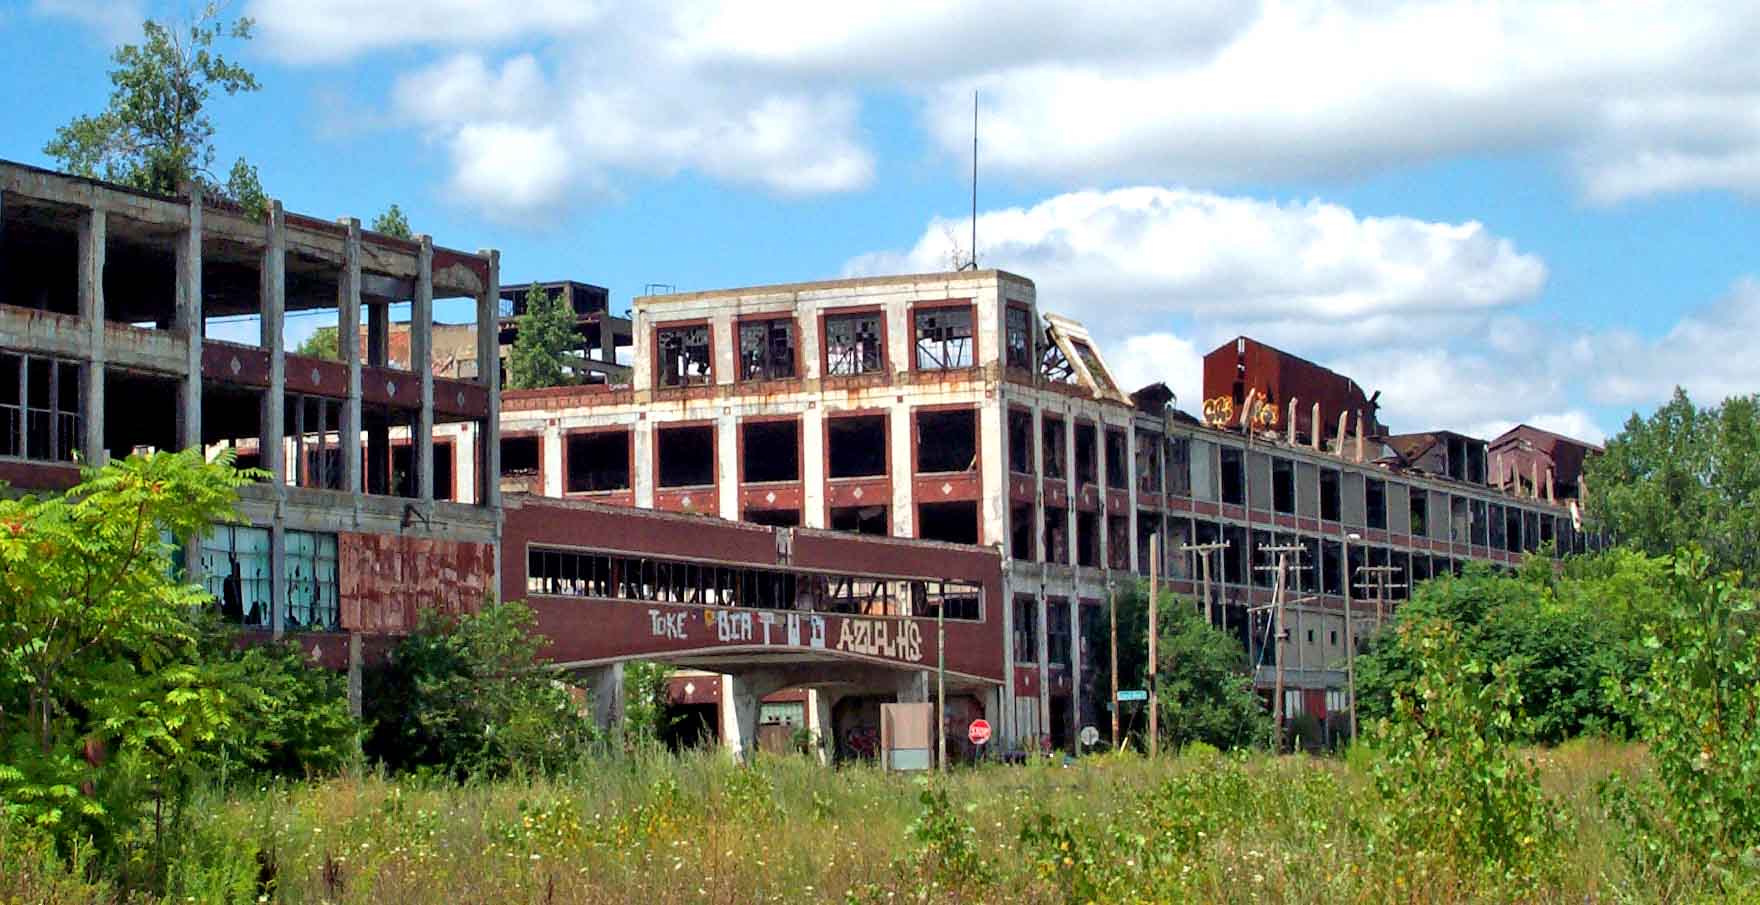 Packard Motors abandoned Detroit